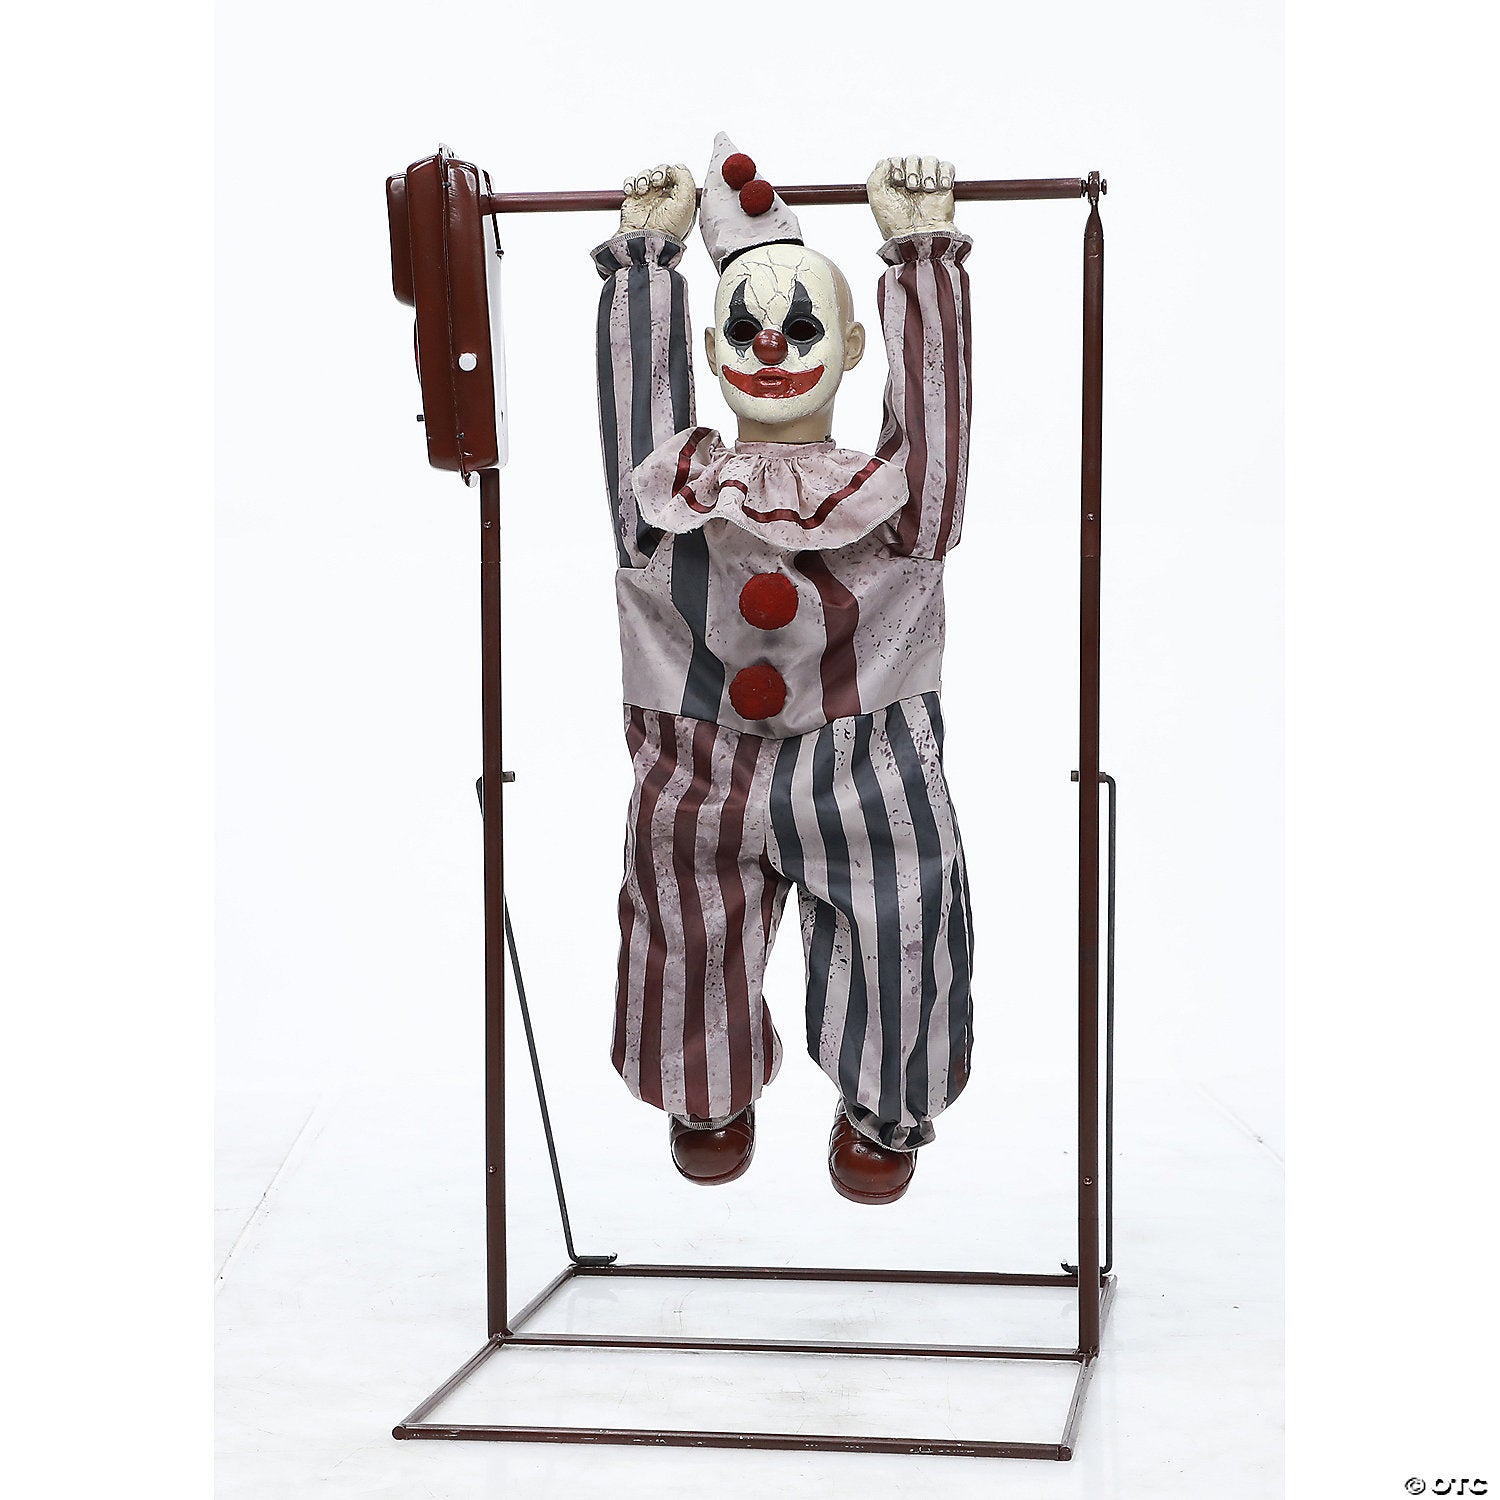 Halloween Animated Tumbling Clown Doll